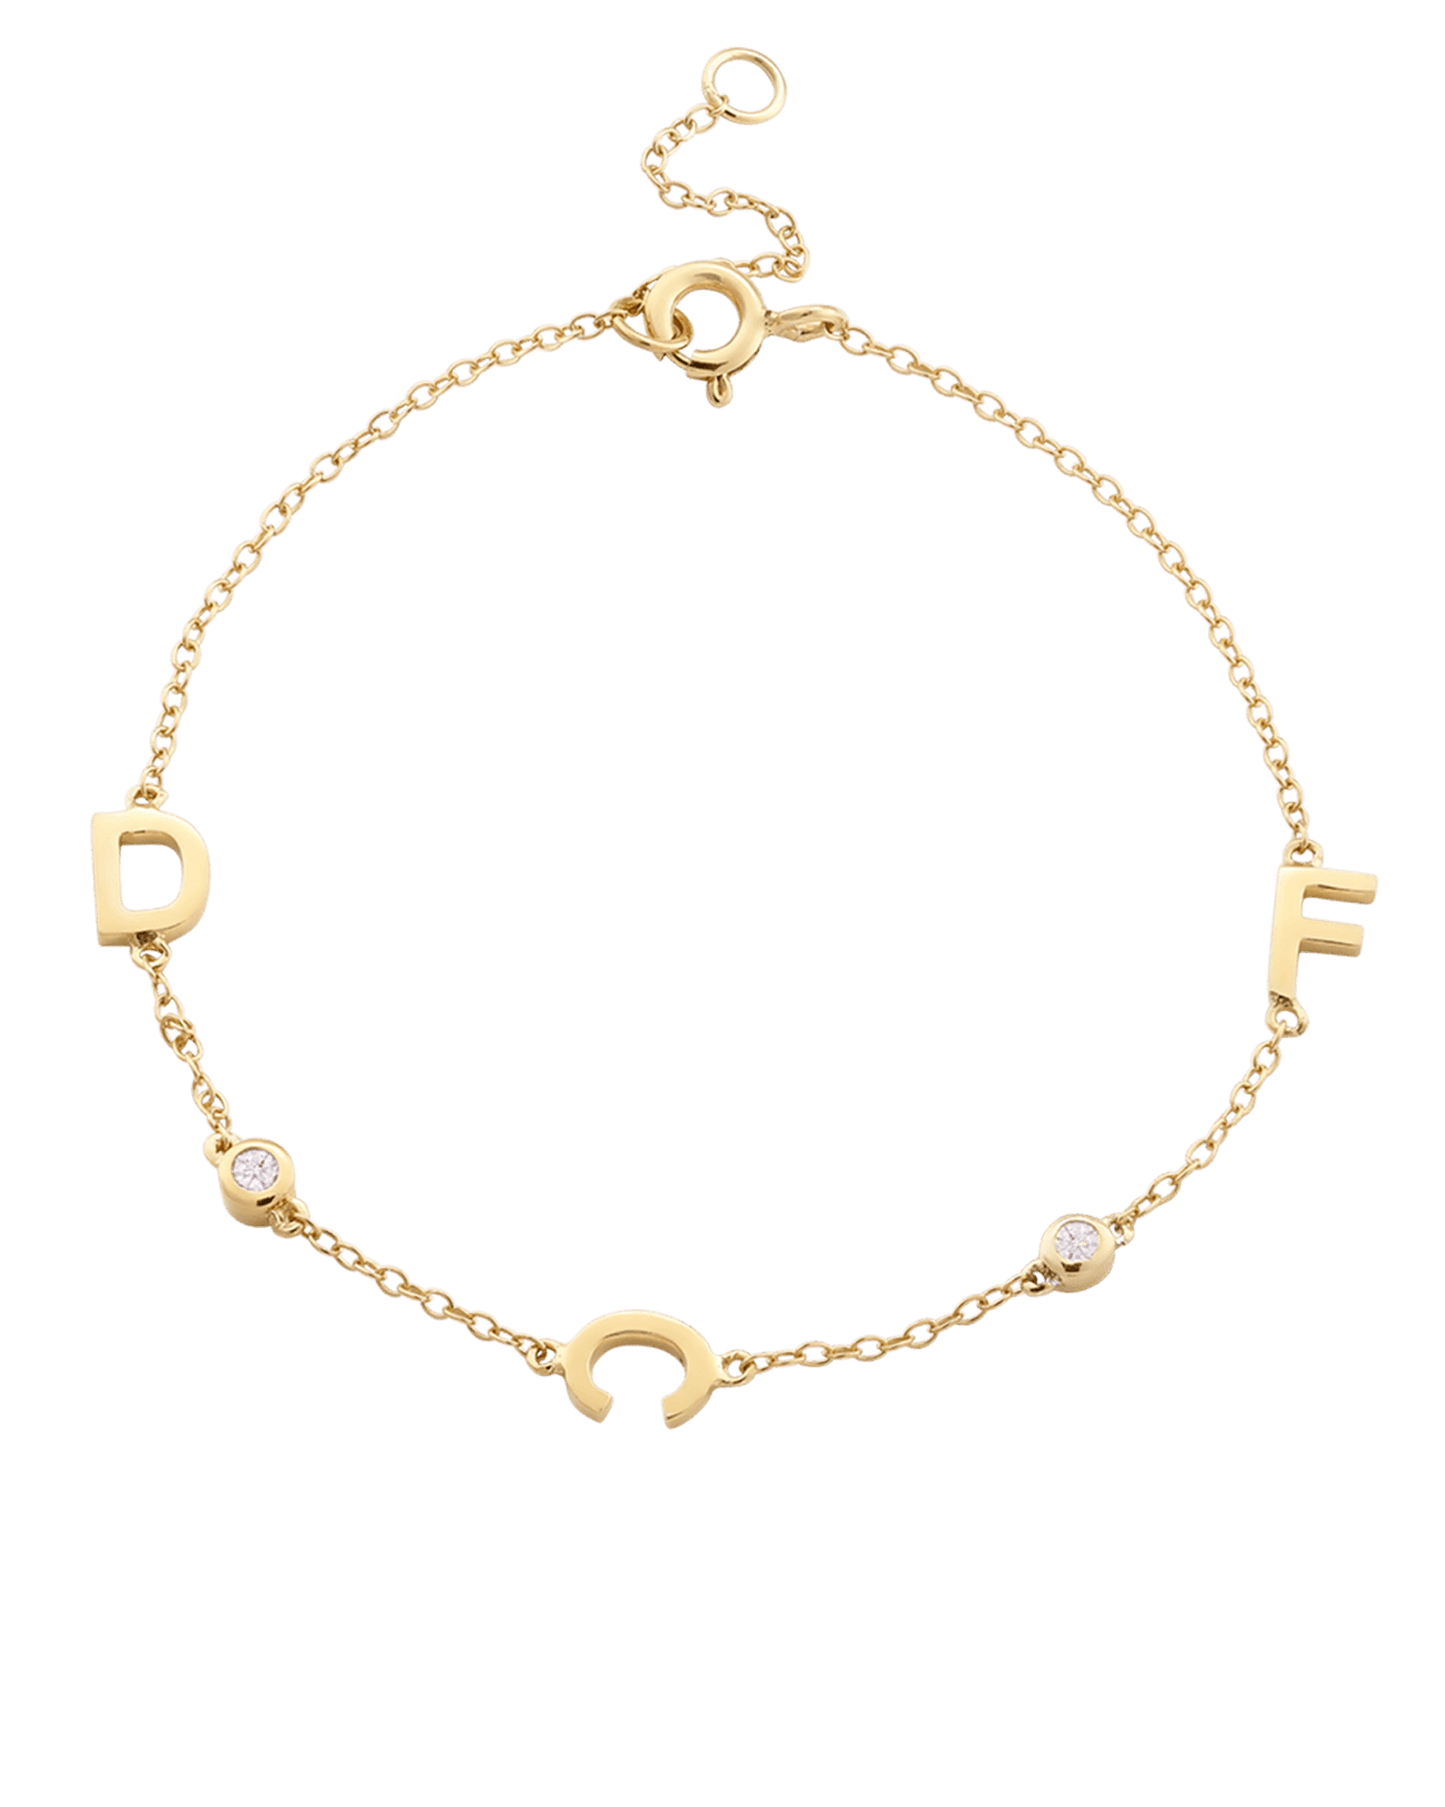 The Initial Bracelet with Diamonds - 14K Yellow Gold Bracelets magal-dev 3 Initials + 2 Diamonds +$80 6"-7" (S-M wrist) 